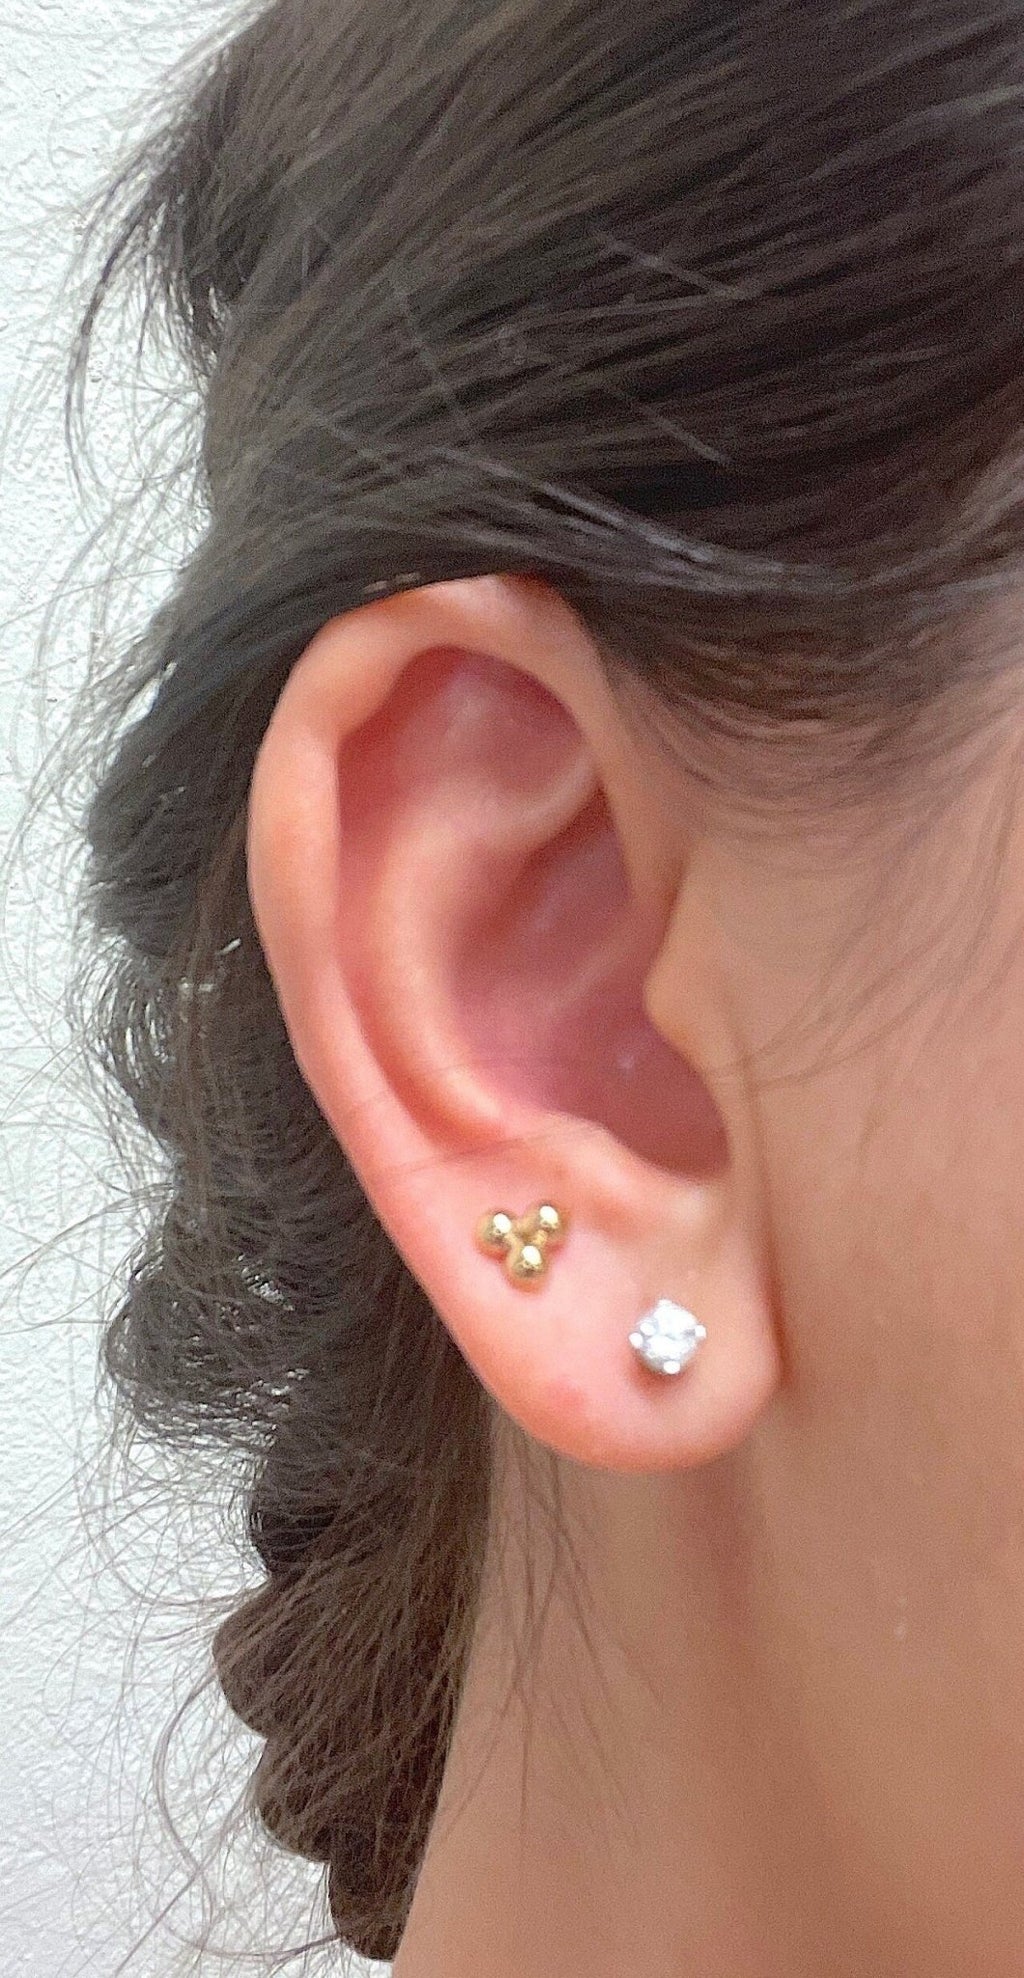 High Quality Jewelry Findings 14K Gold Filled Pattern Earring Hook Ear  Hooks For Earring Making